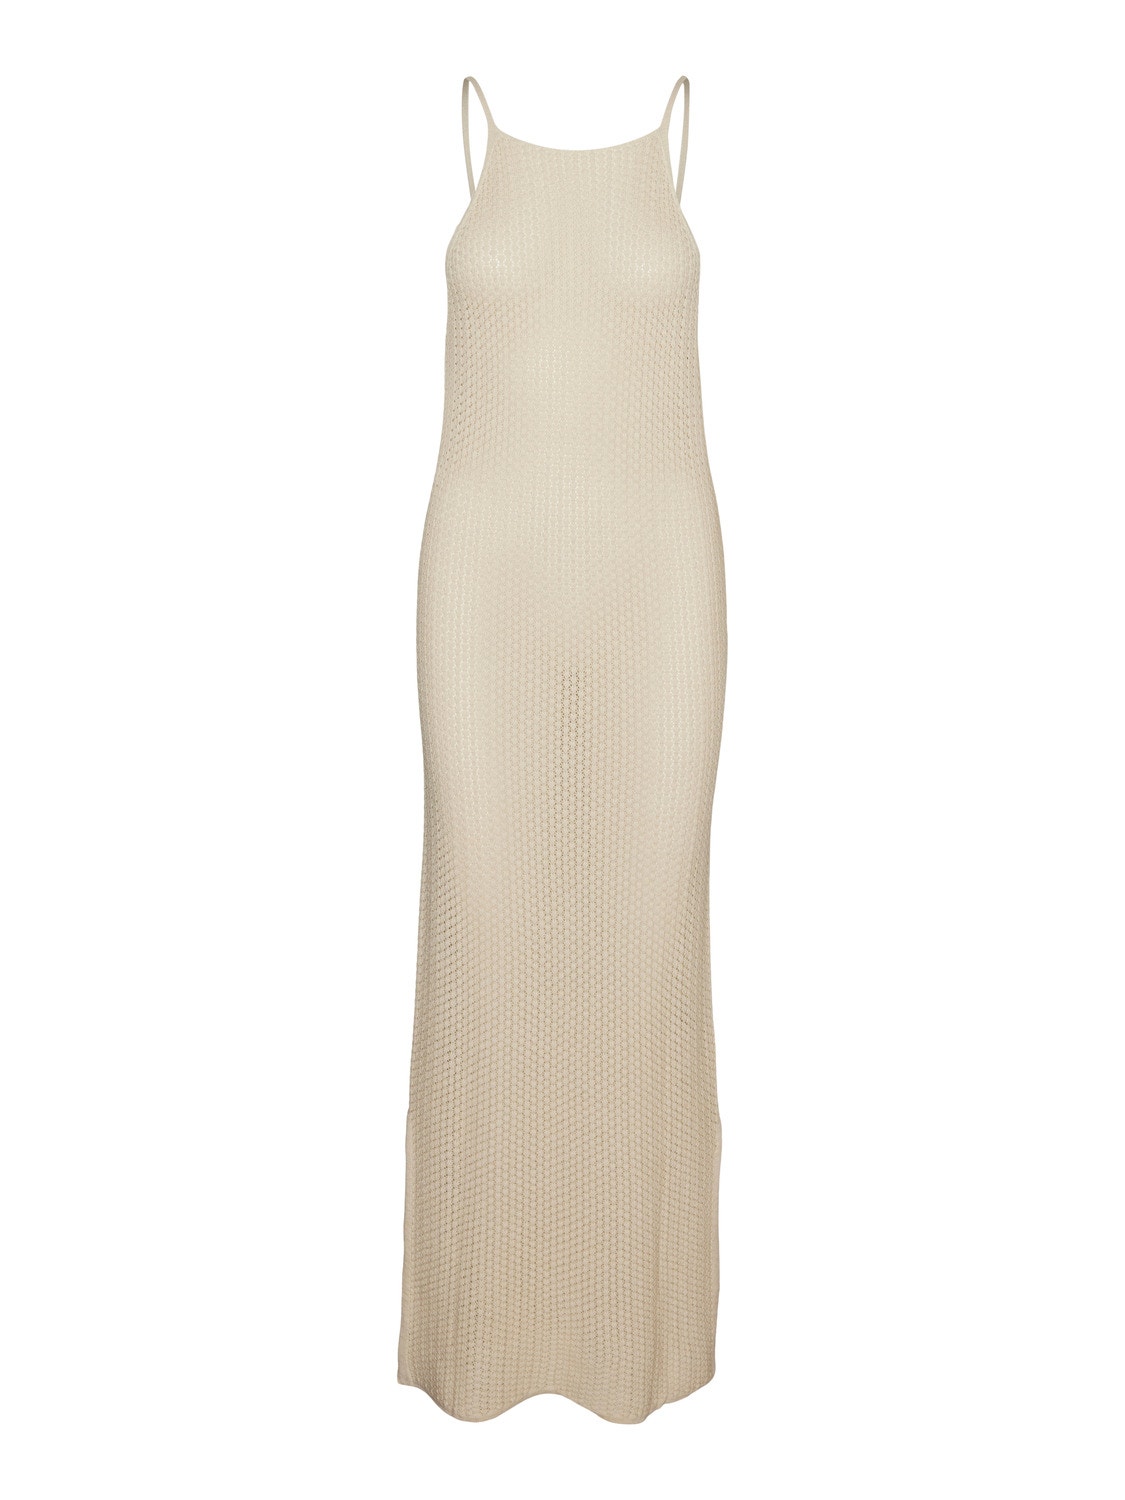 Vero Moda VMHAVANA Long dress -Birch - 10302921